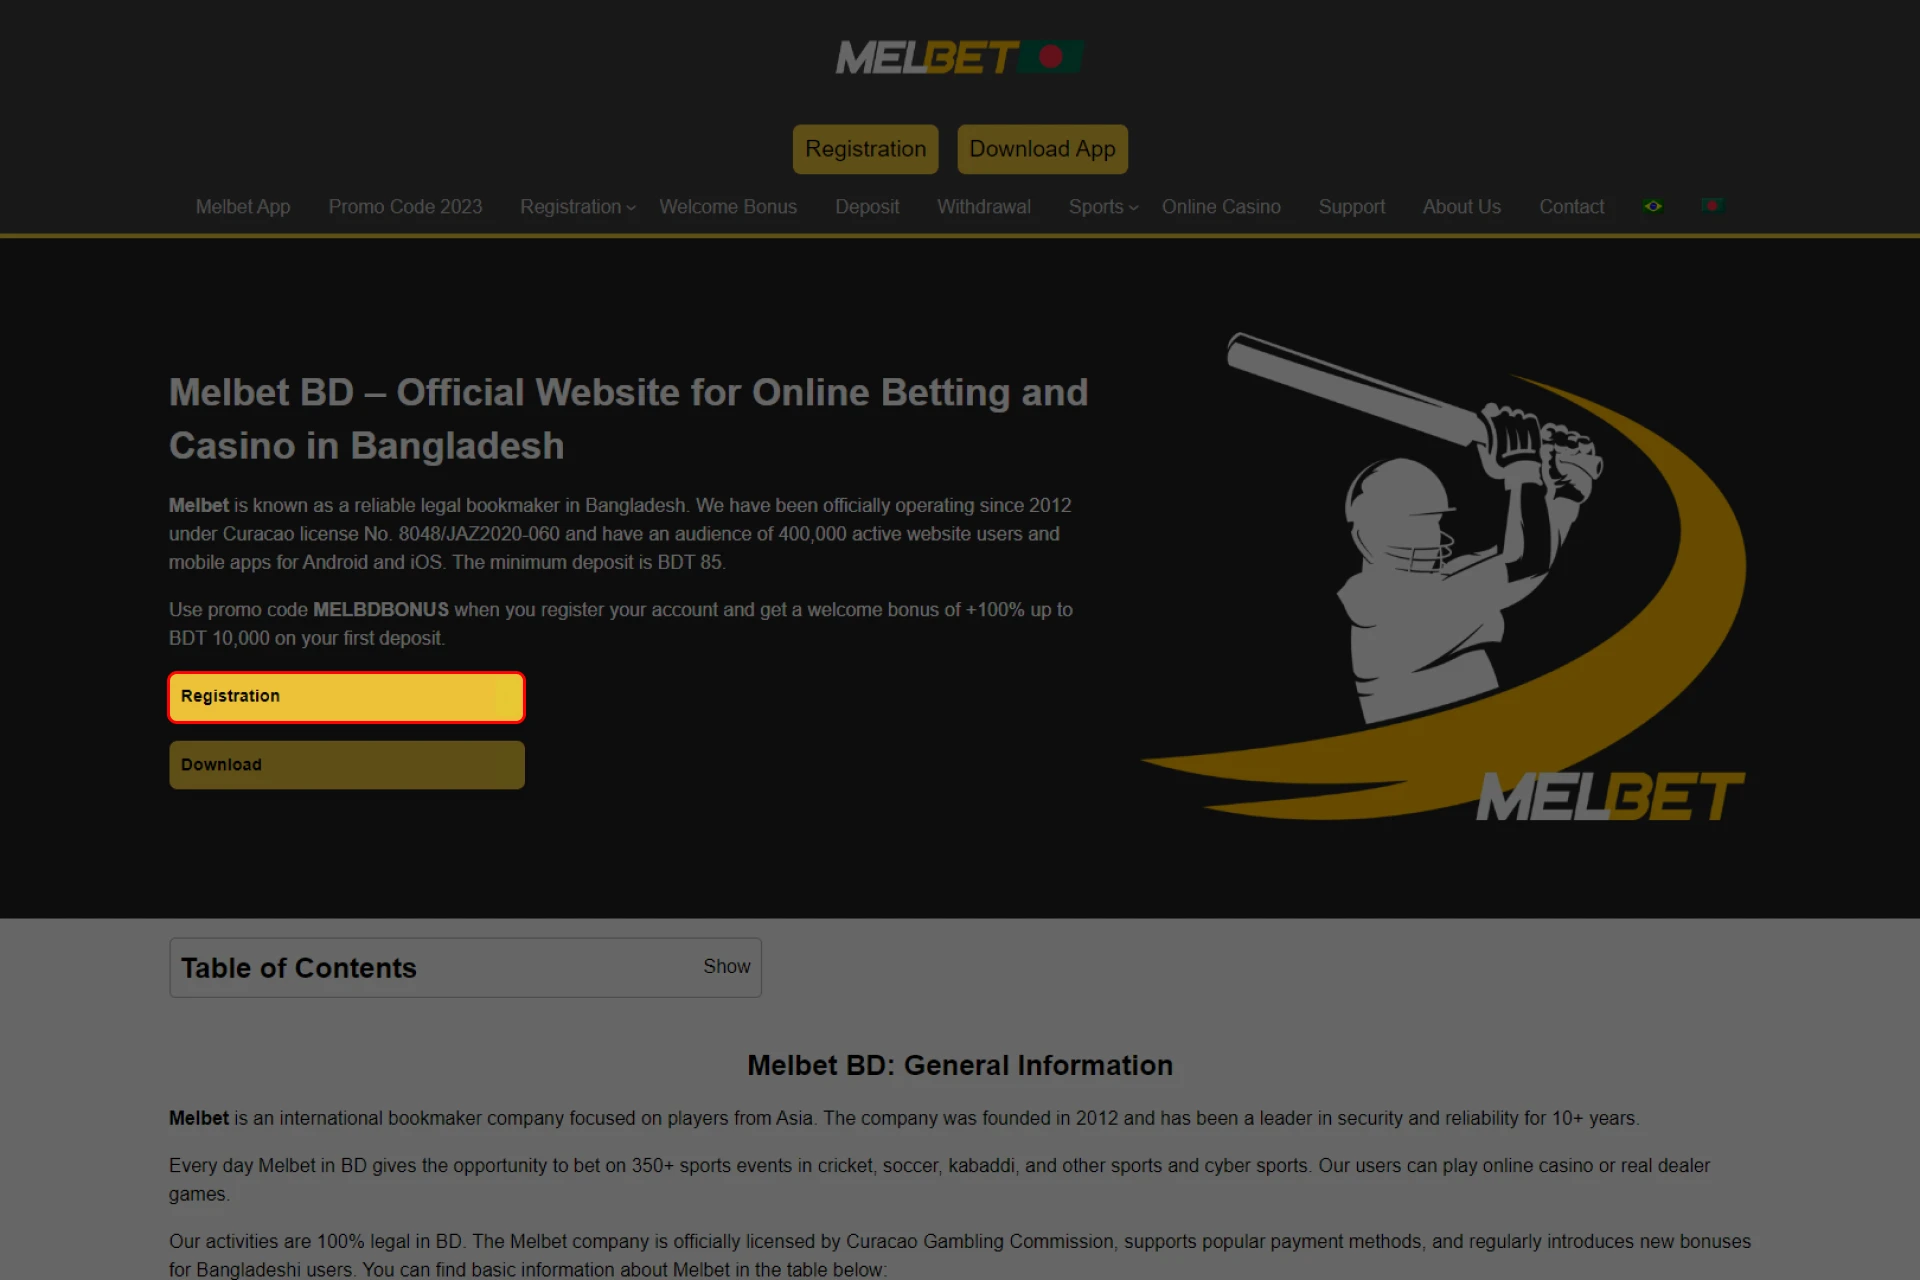 Create an account to get Melbet welcome bonus.